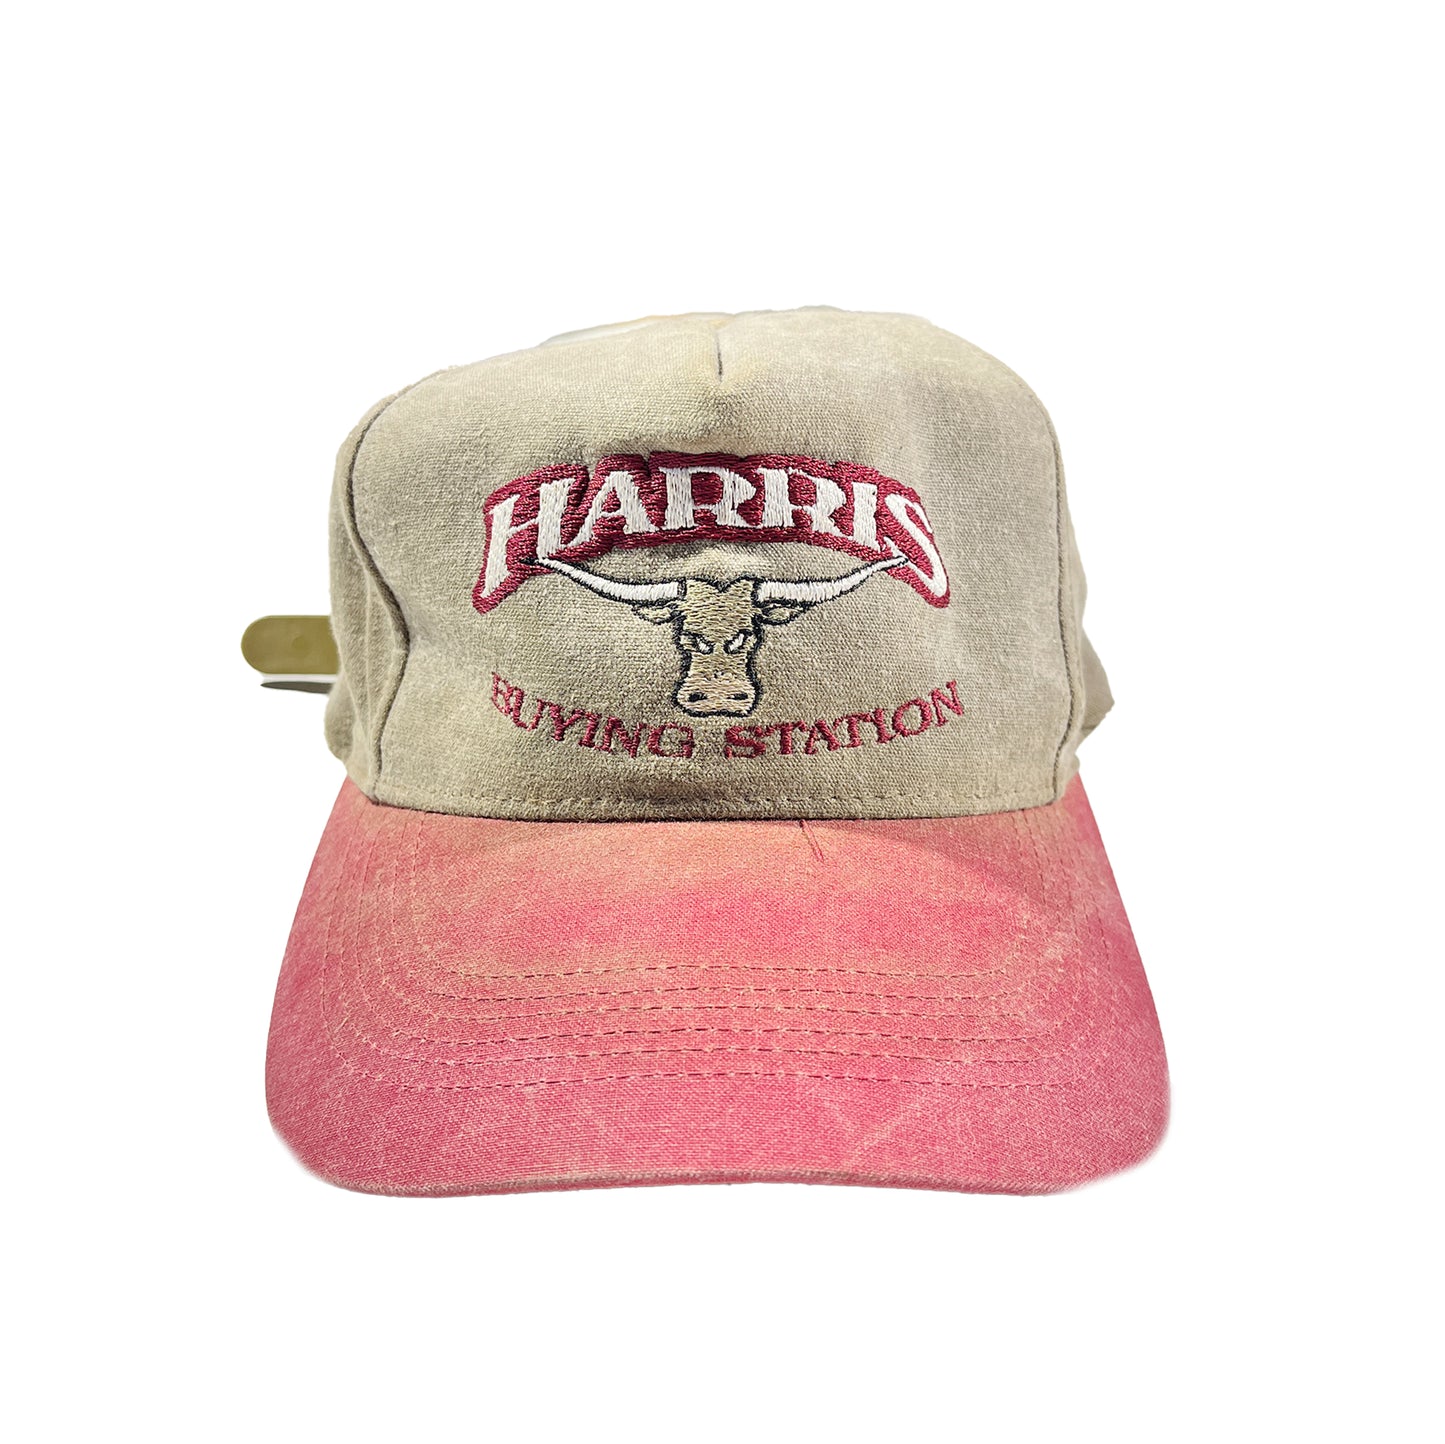 Vintage Harris Buying Station Hat Western